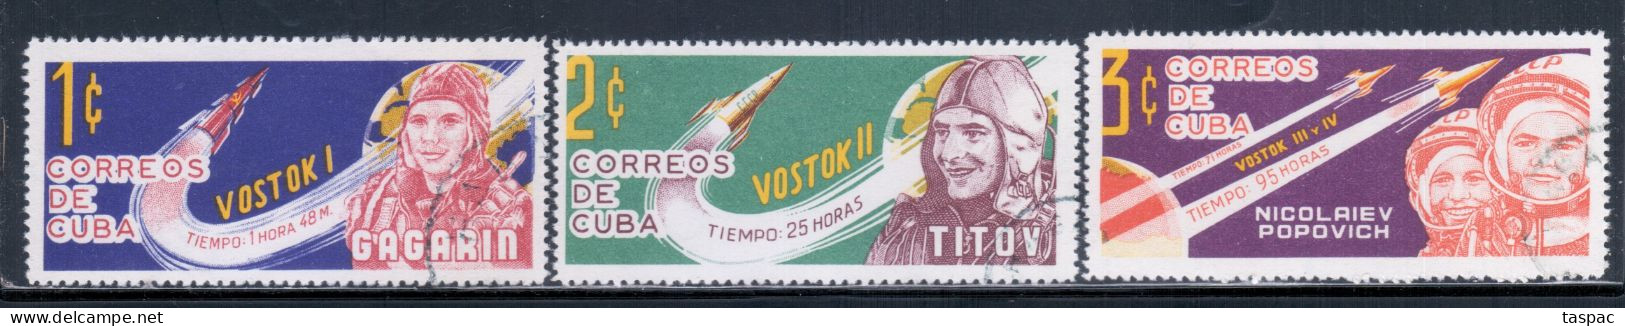 Cuba 1963-64 Mi# 835-837 Used - Soviet Space Flights / Cosmonauts (I) - North  America